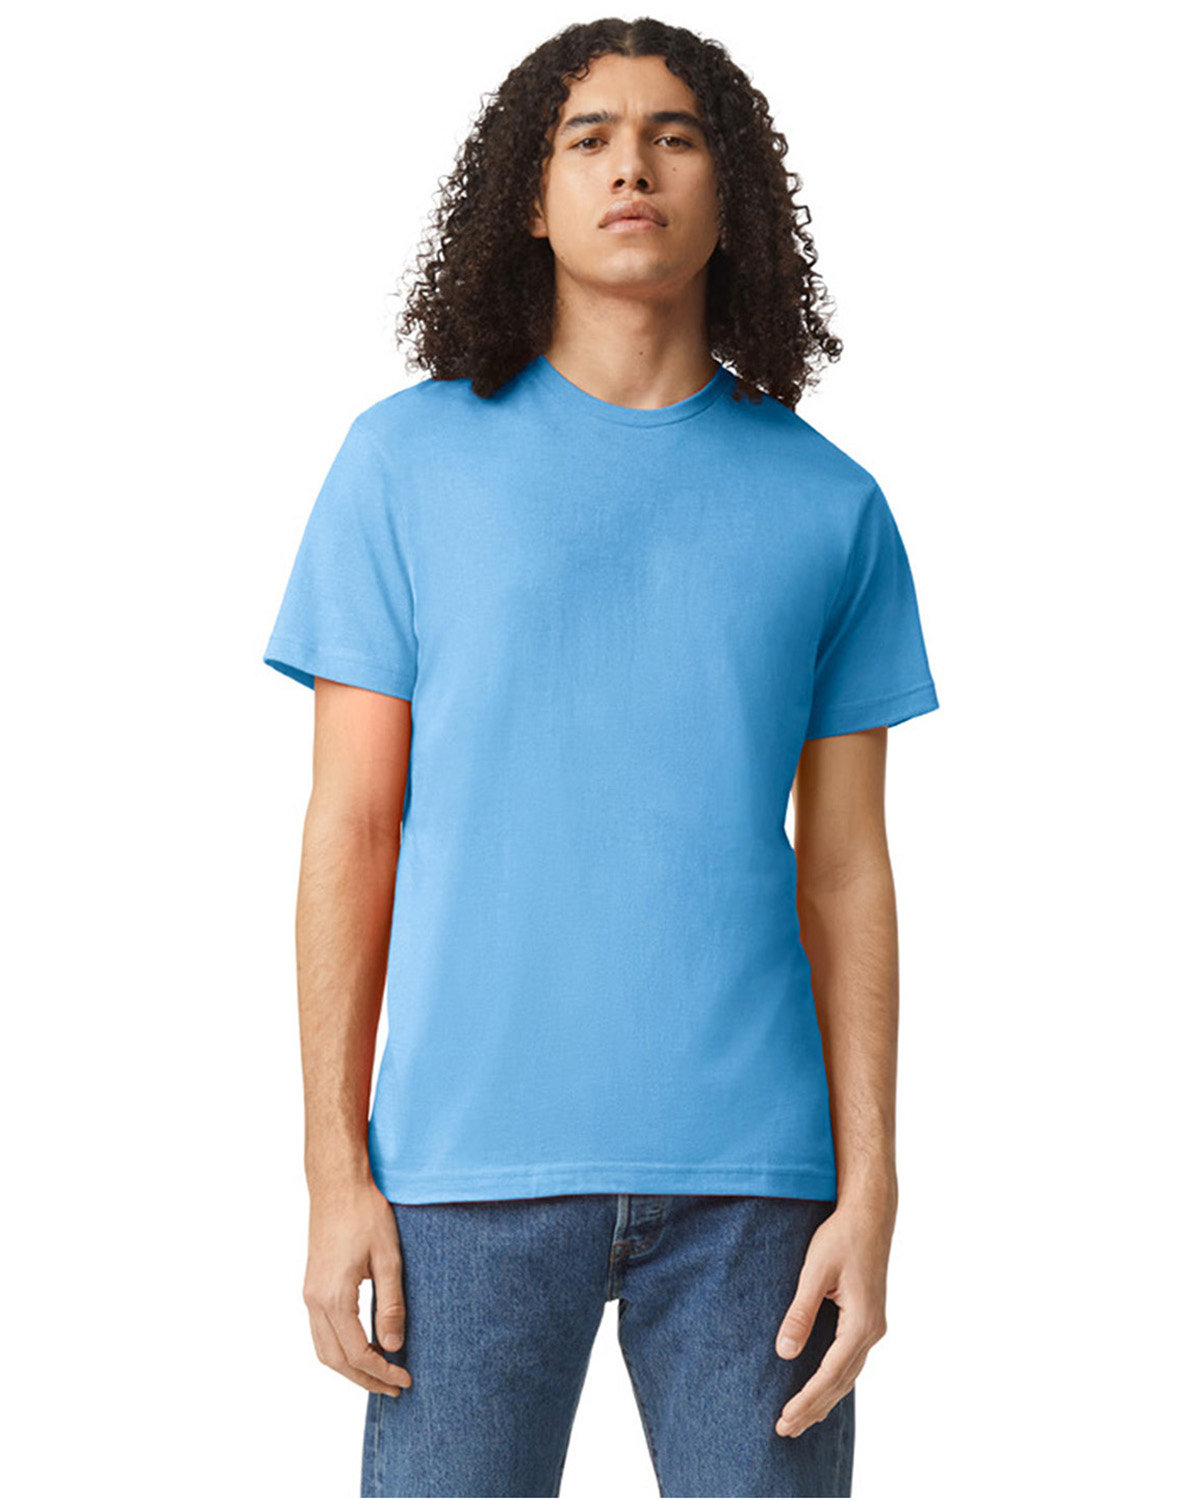 American Apparel Unisex CVC T-Shirt HEATHER LT BLUE 